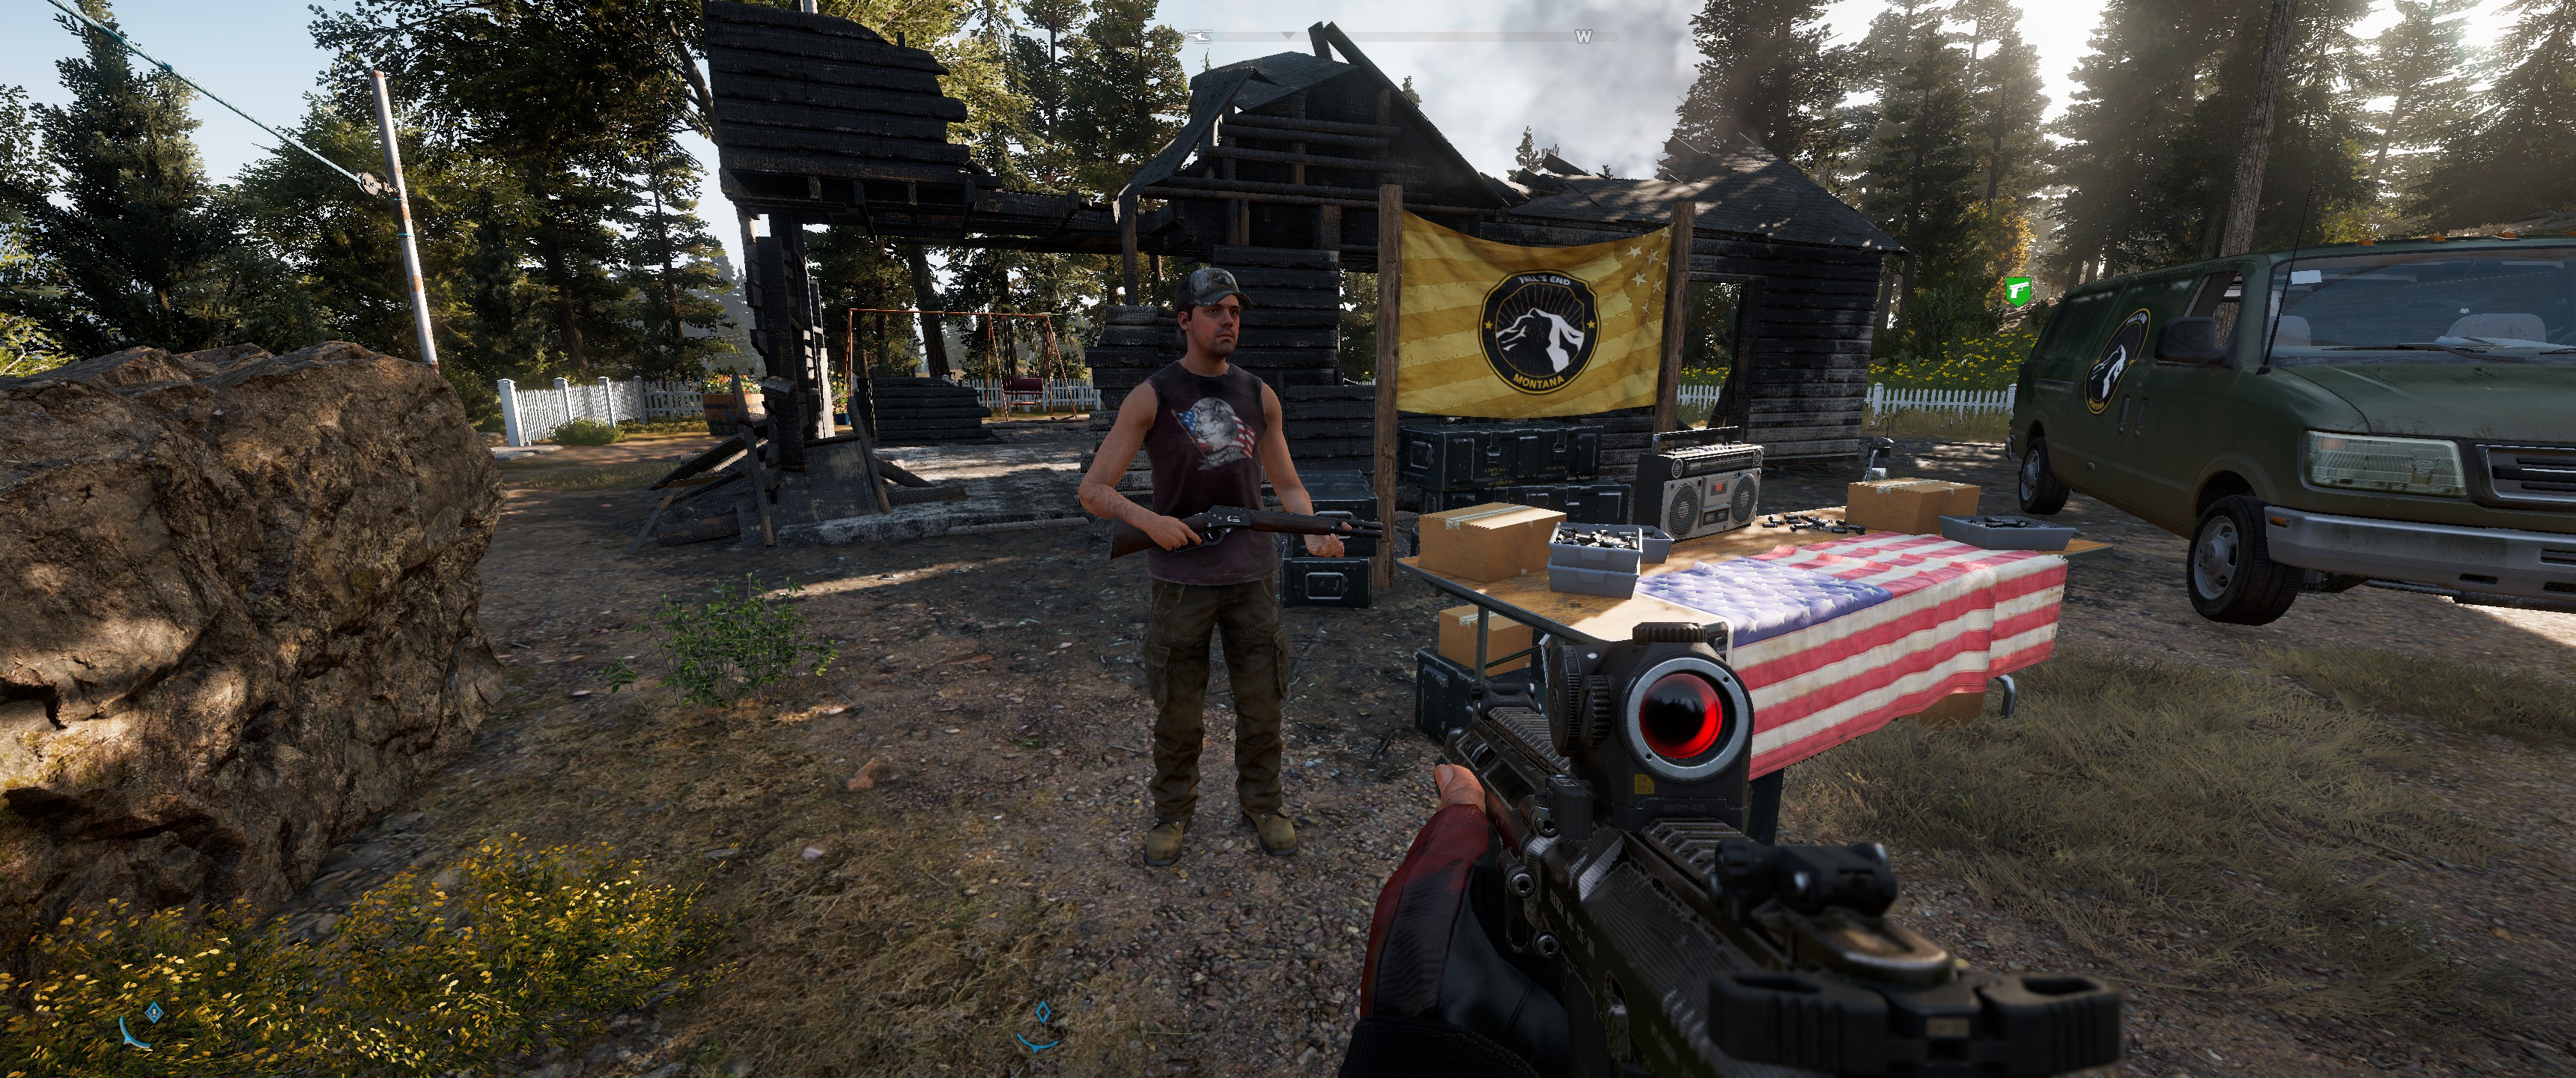 Far Cry 5 Resistance mod image Mod DB.